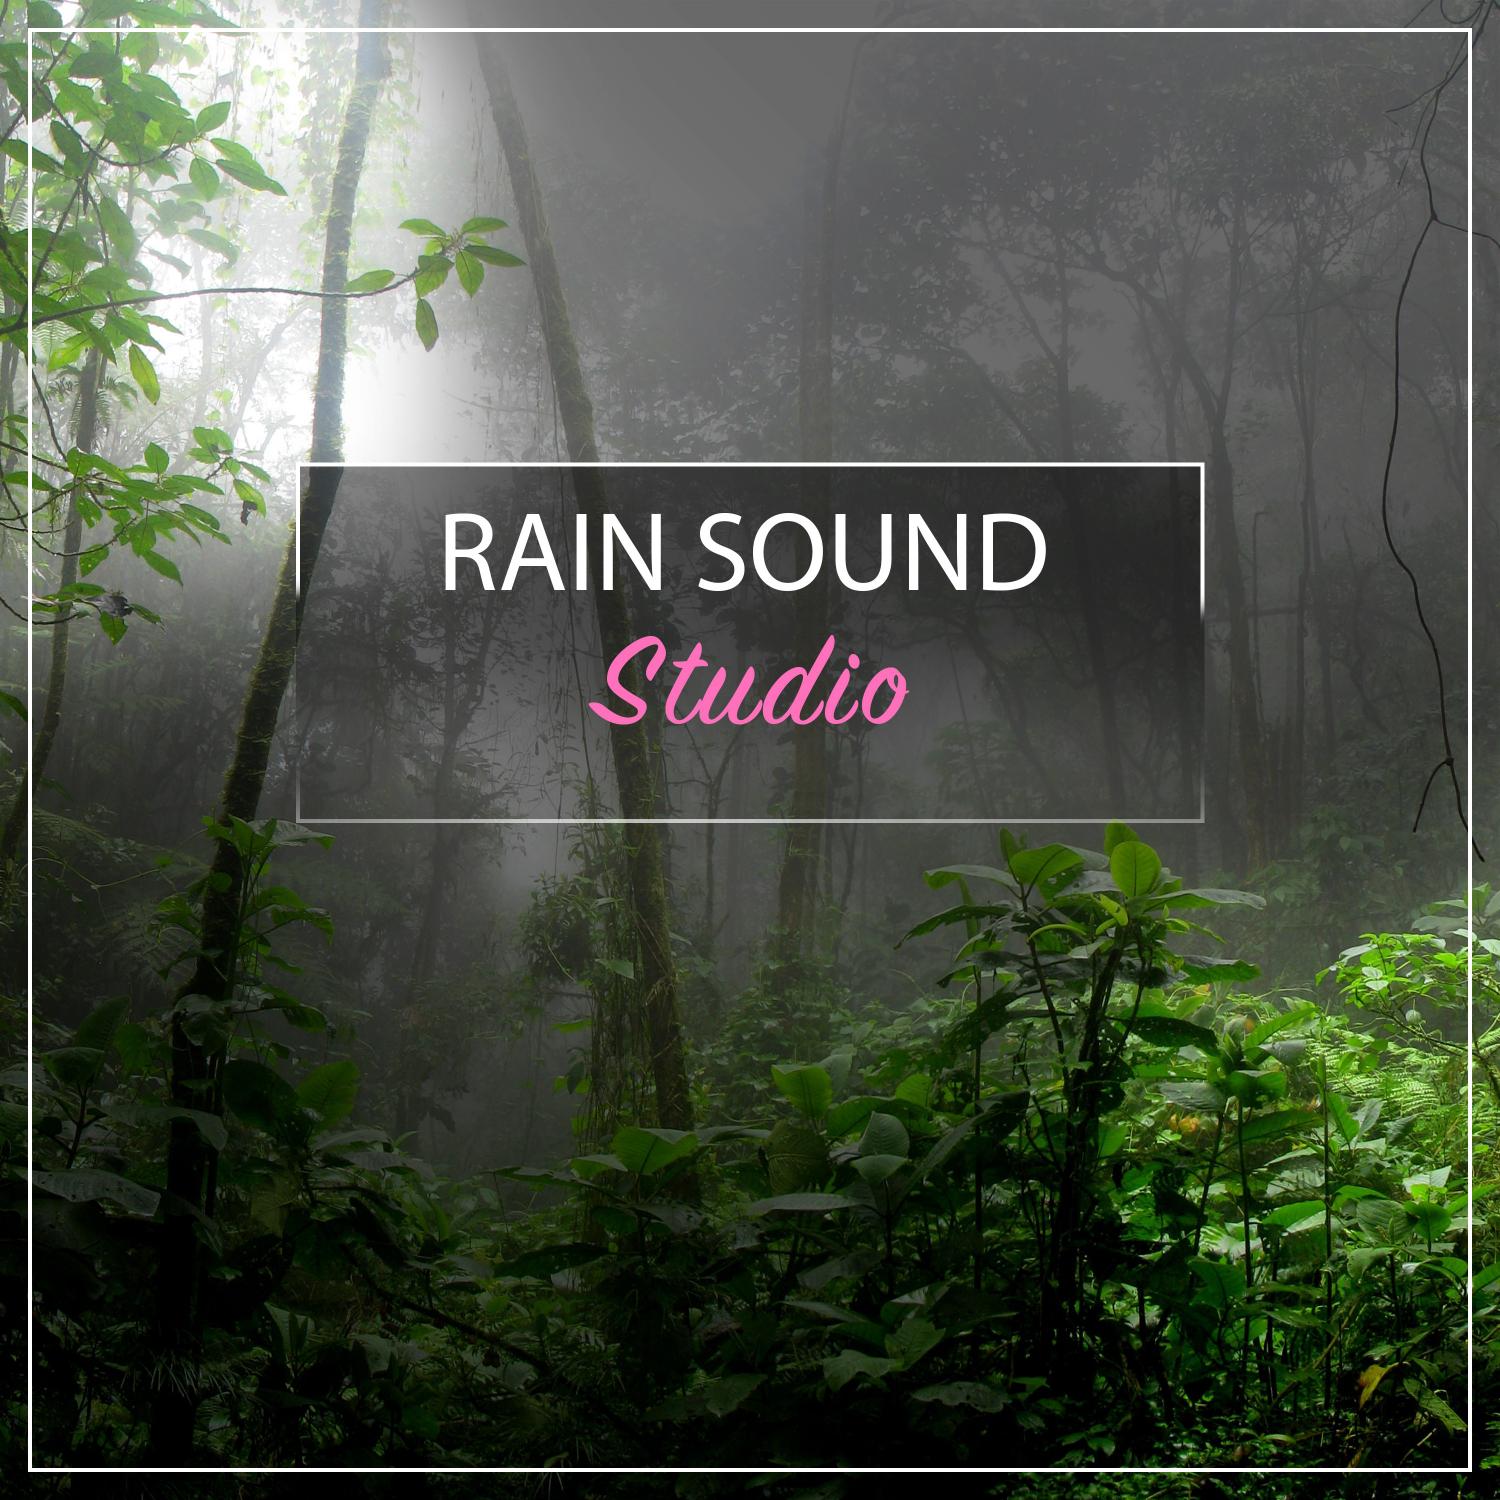 12 Tracks from the Rain Sound Studio - Rain and Nature Sounds